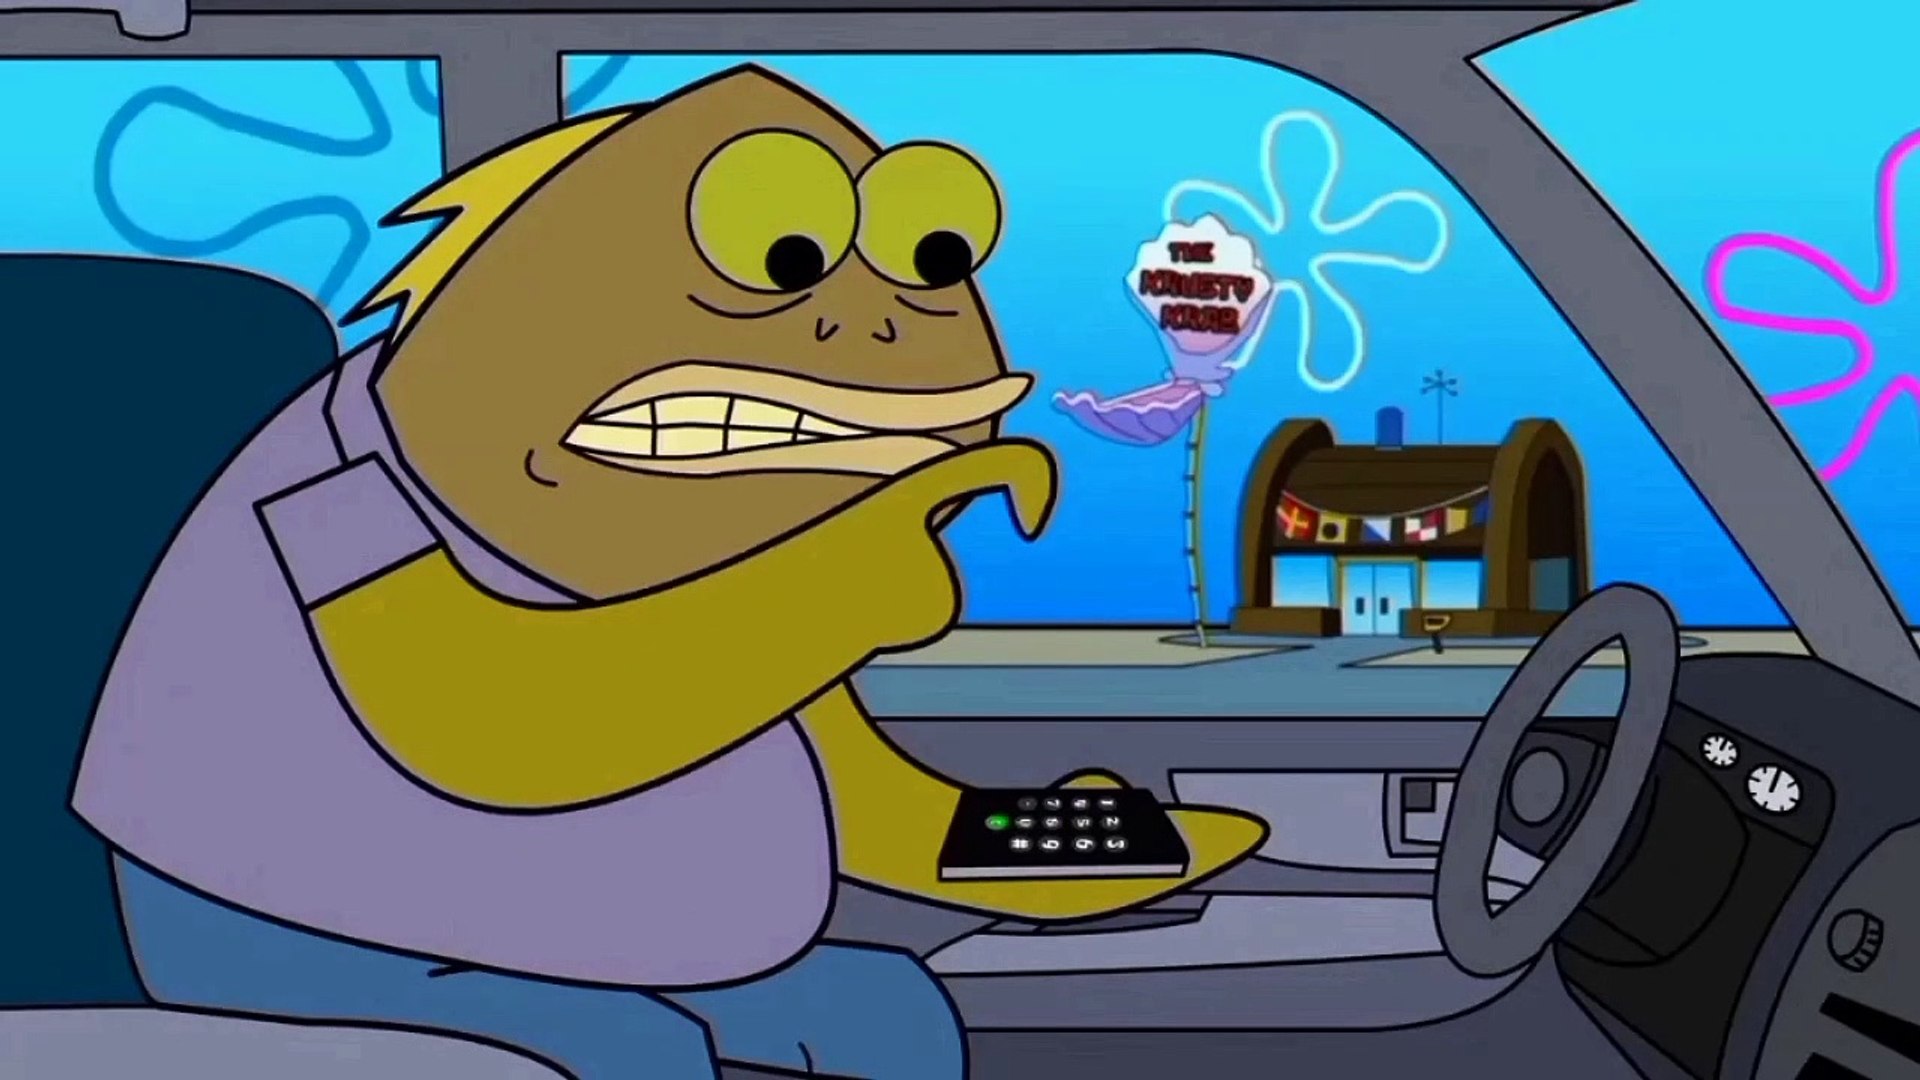 Spongebob Squarepants School Bus Car Games To Play For Free Online - video  Dailymotion